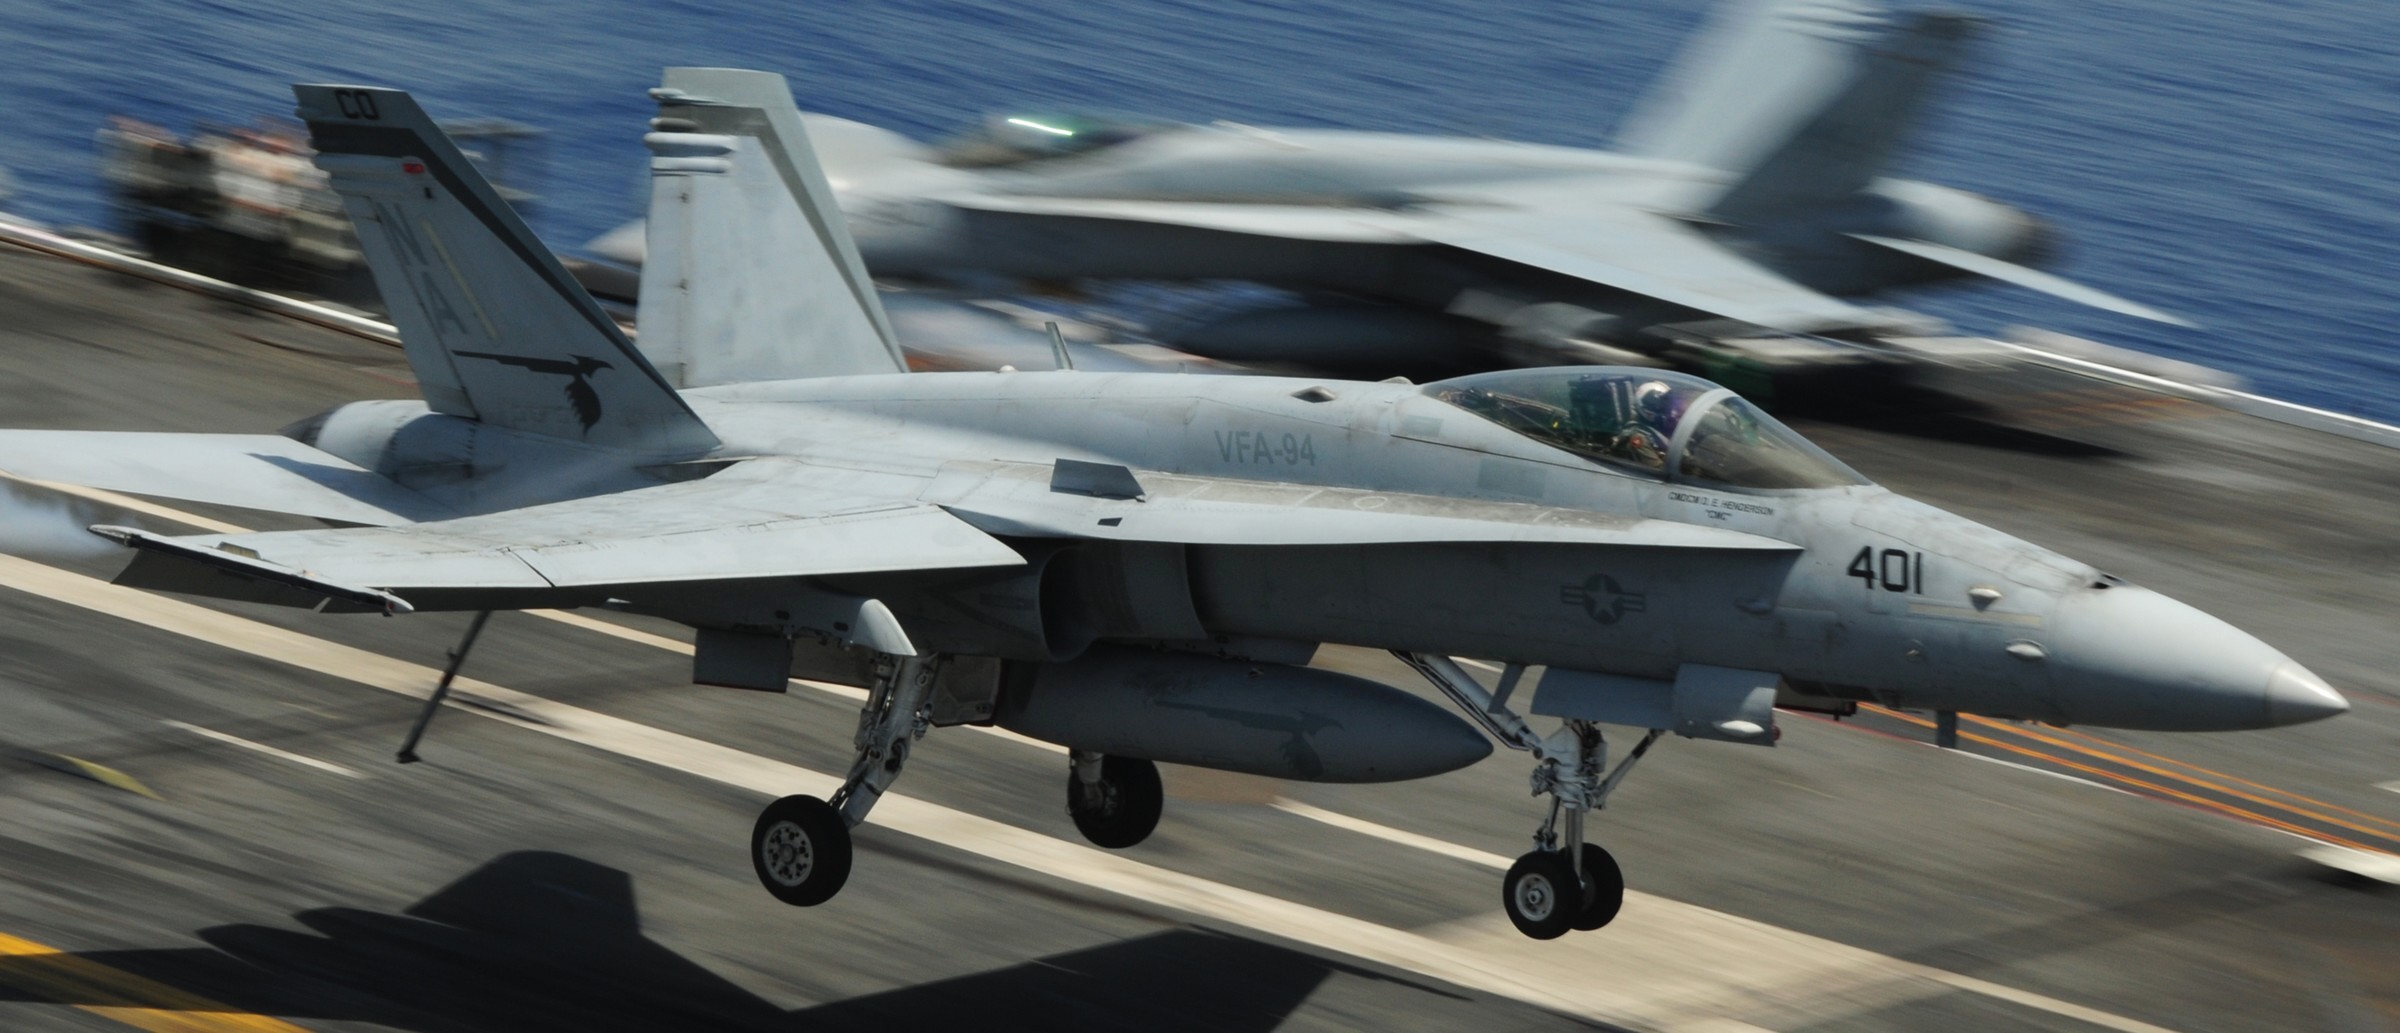 vfa-94 mighty shrikes strike fighter squadron f/a-18c hornet cvw-17 uss carl vinson cvn-70 us navy 38p